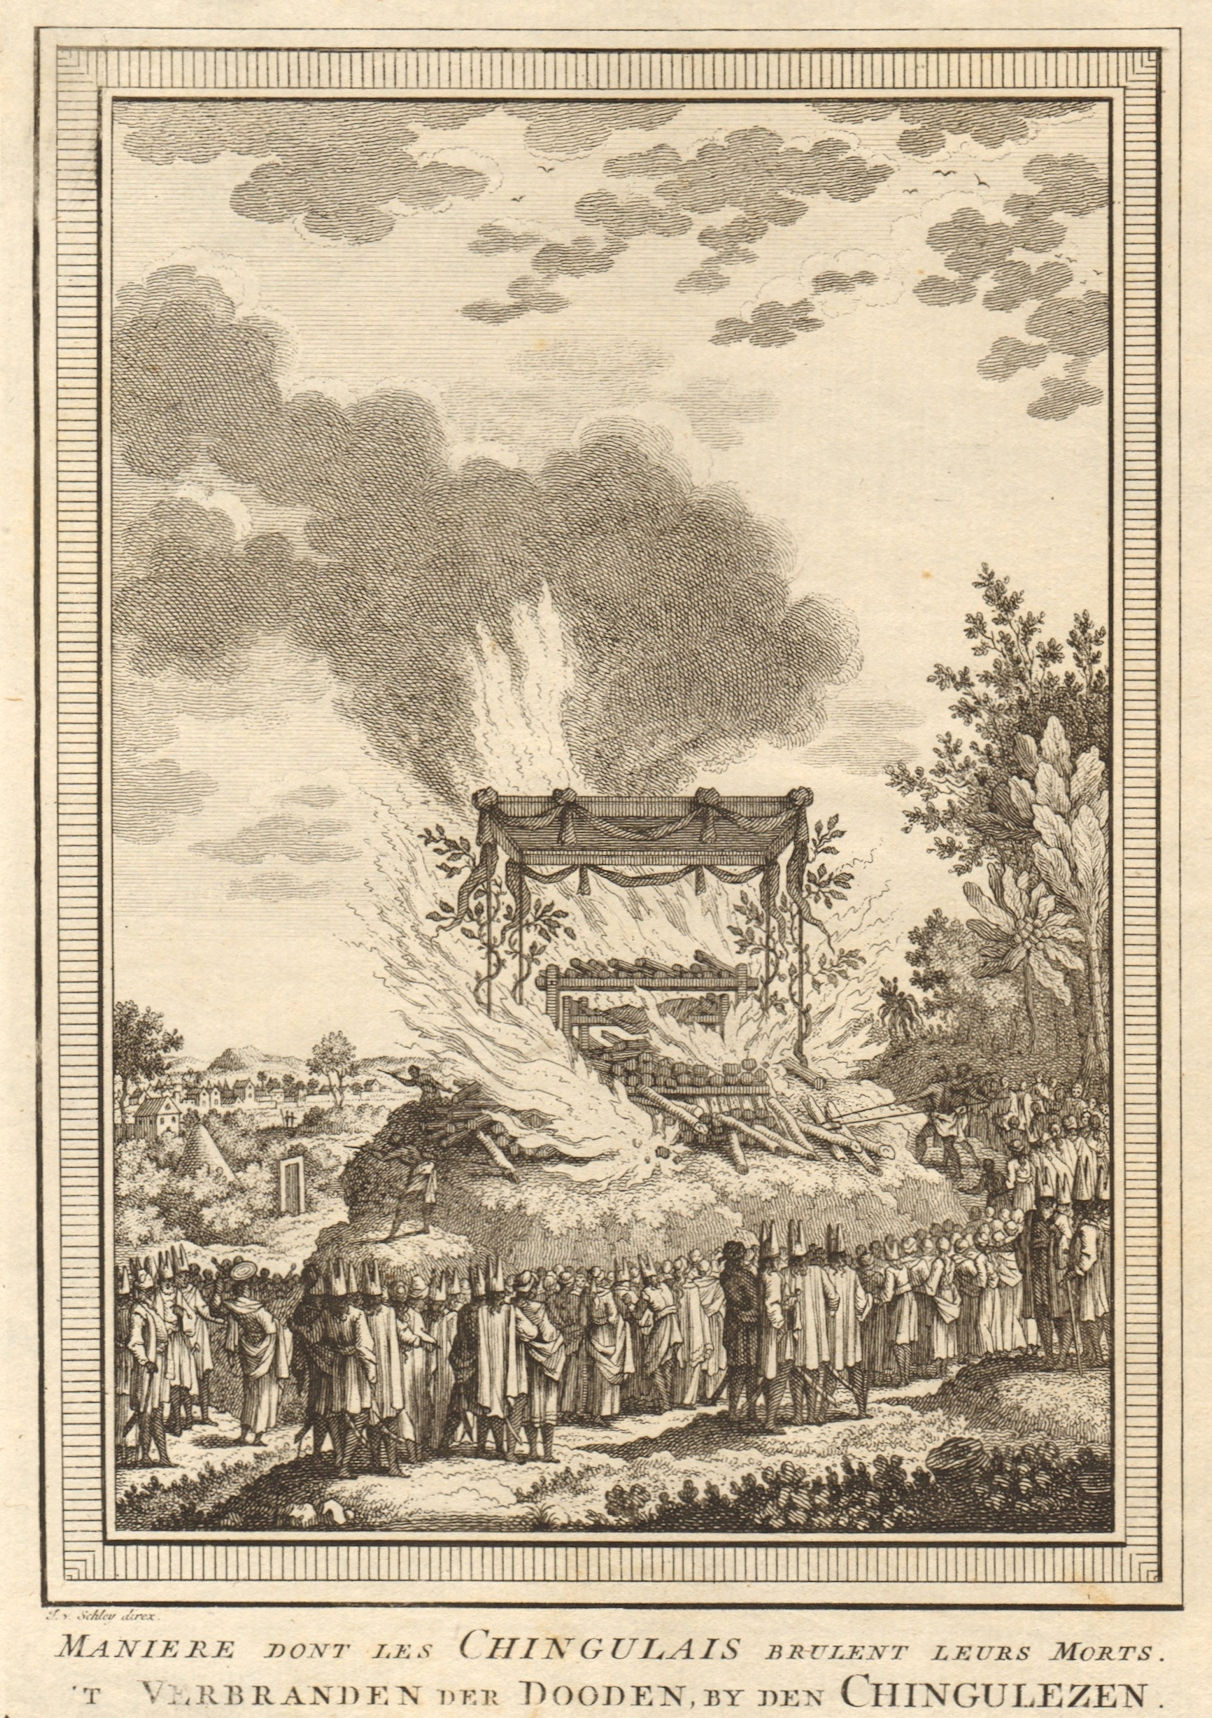 'Les Chingulais brûlent leurs morts'. Sri Lanka Ceylon. Cremation. SCHLEY 1755